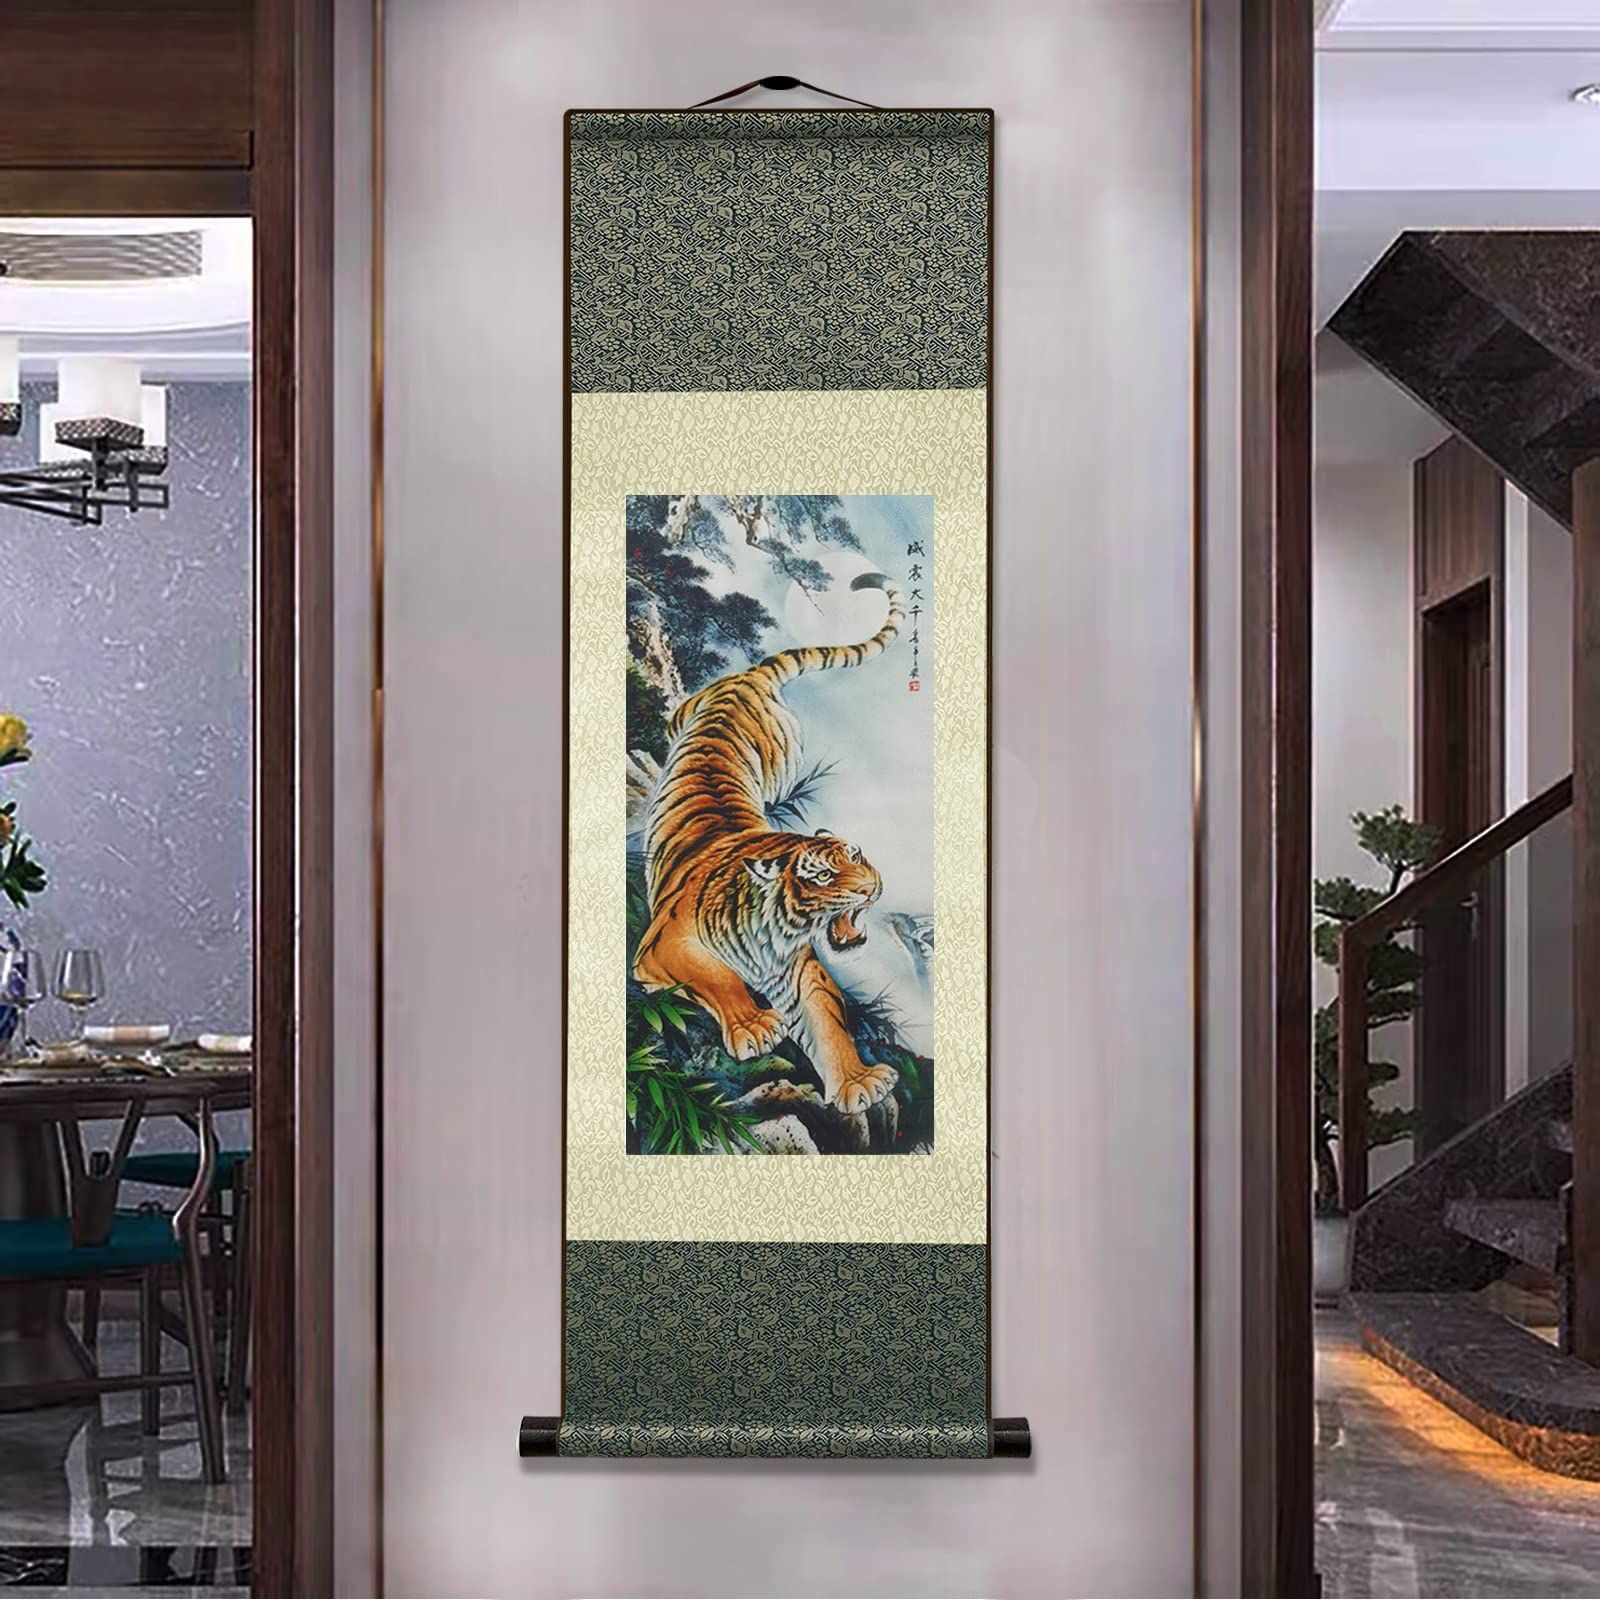 中国美術 林春山 威震山河 虎 虎書画 肉筆 牌 掛け物 絹画 絵 飾り物 